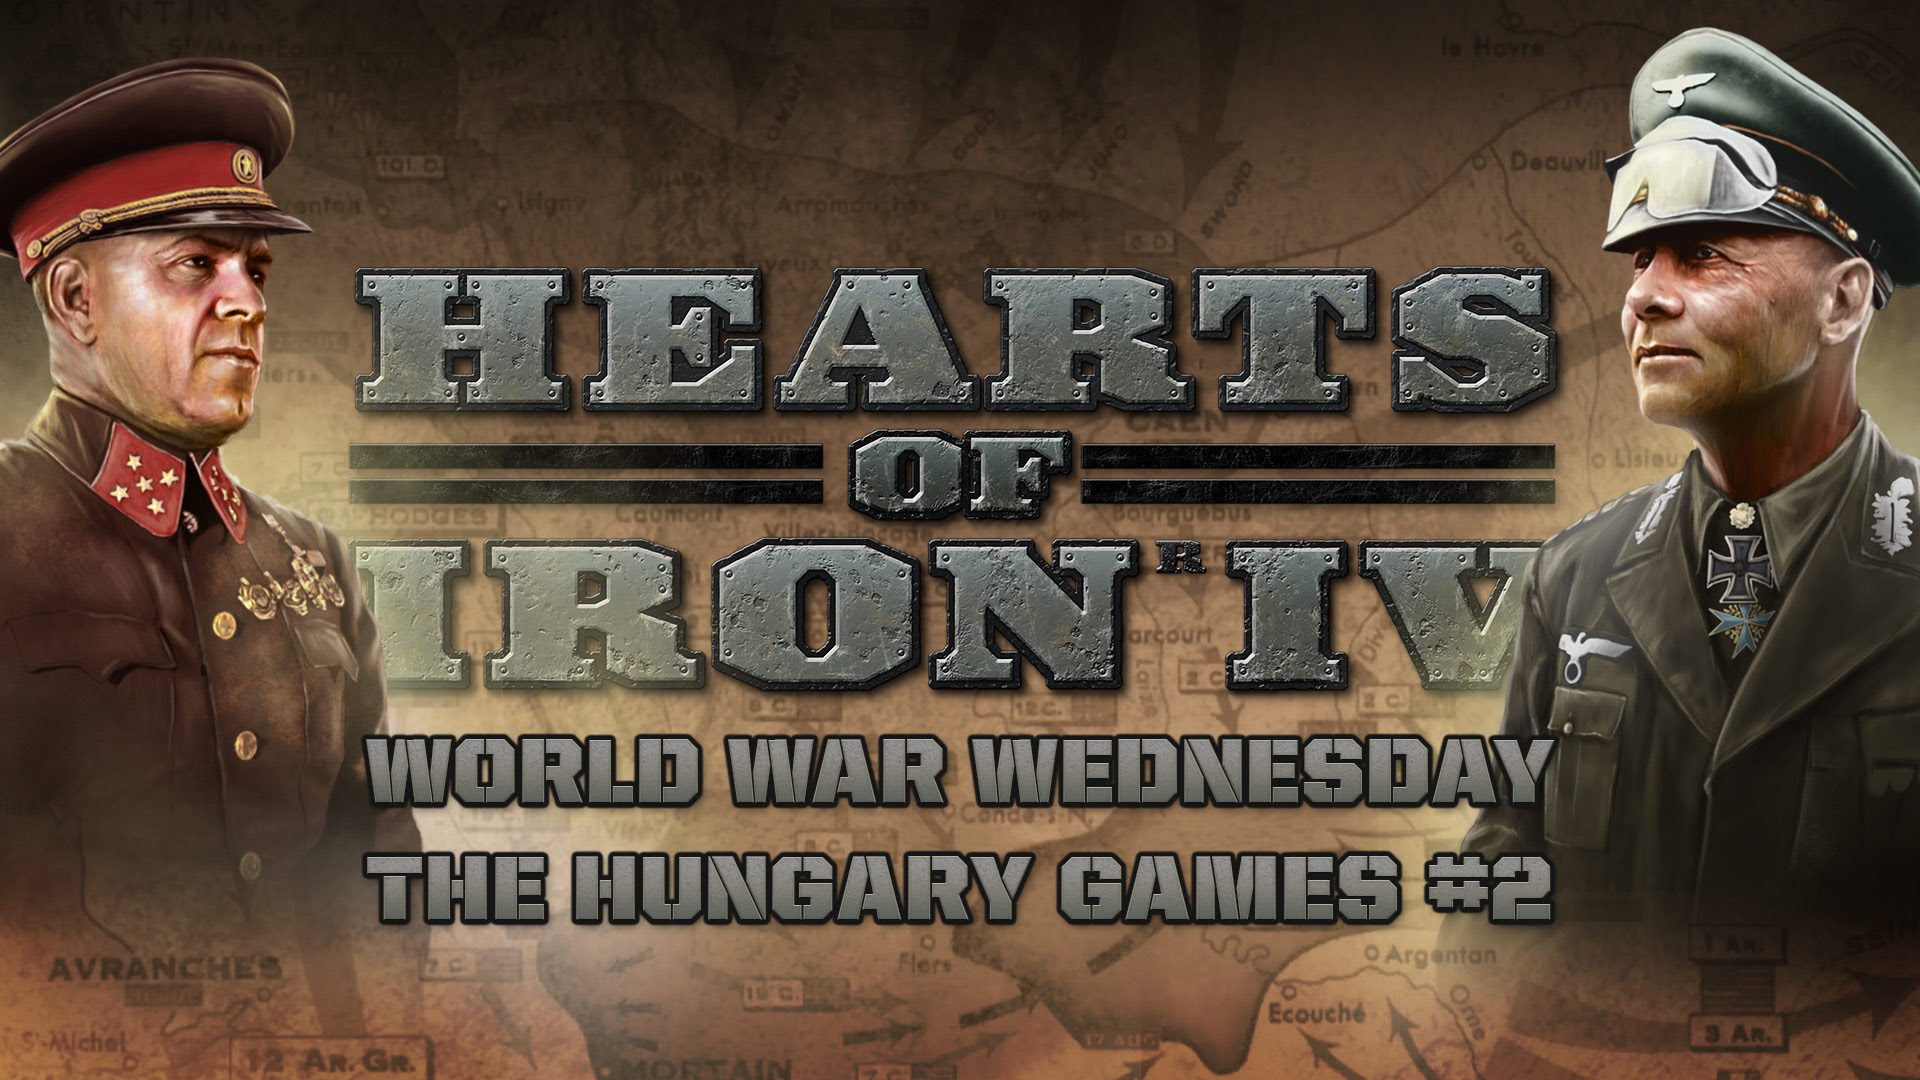 HoI IV – “World War Wednesday” – The Hungary Games #2